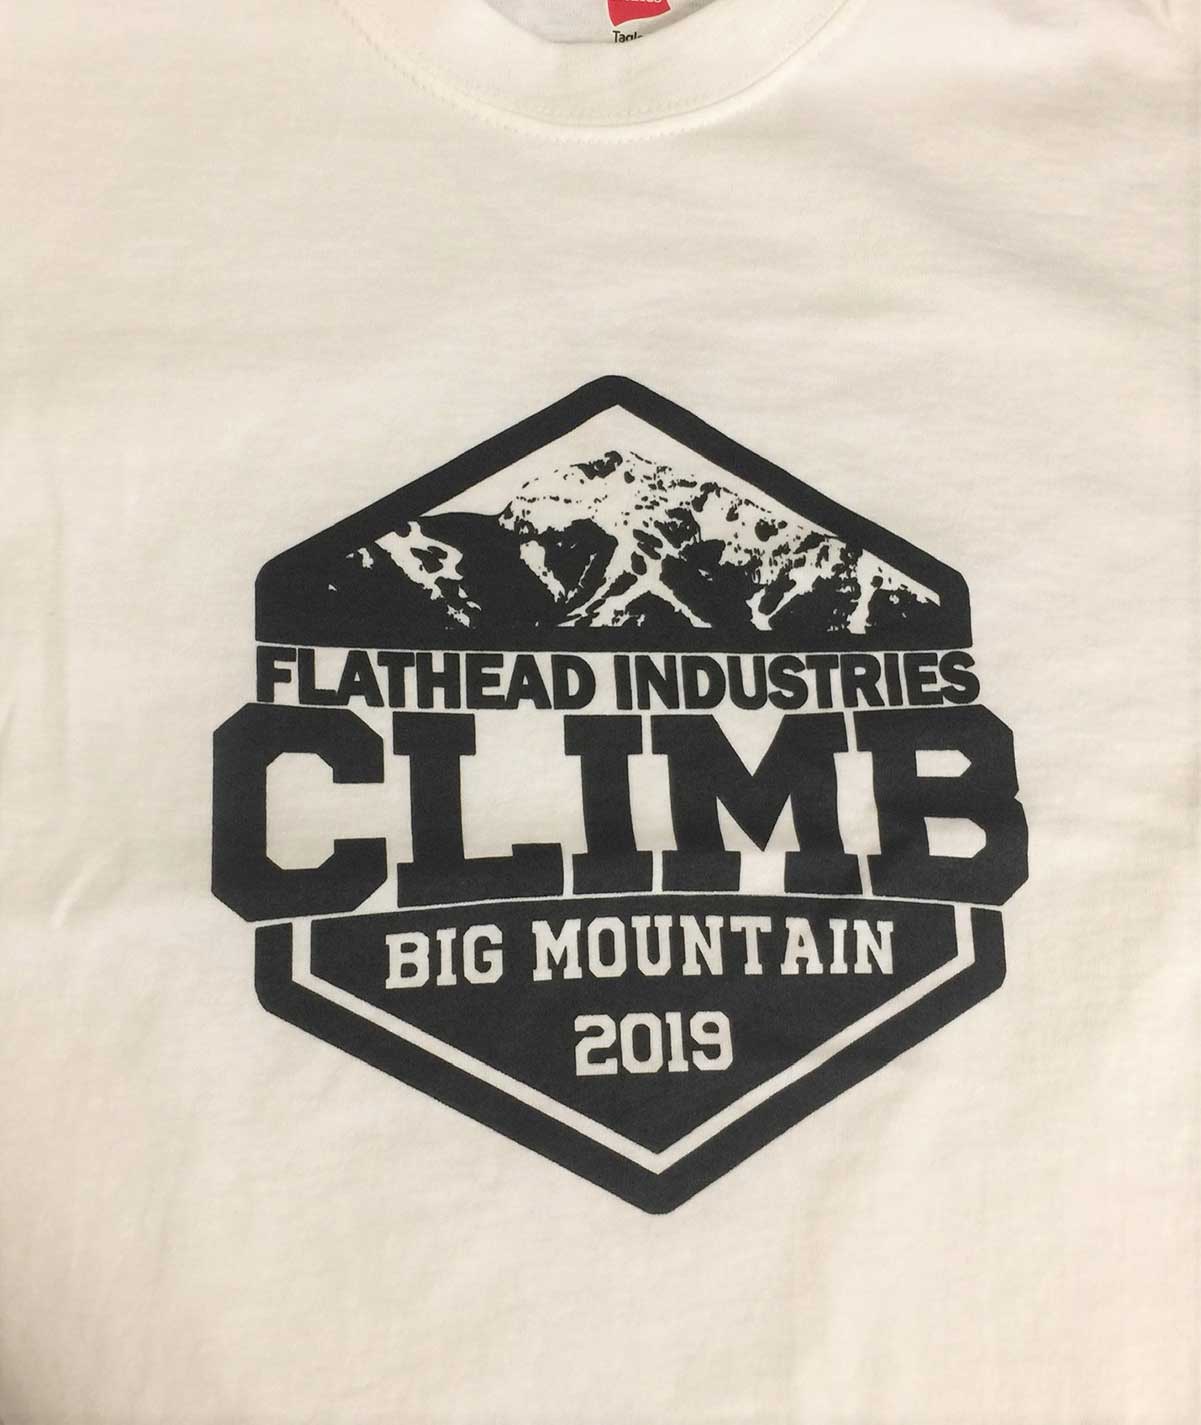 Flathead Industries event t shirt